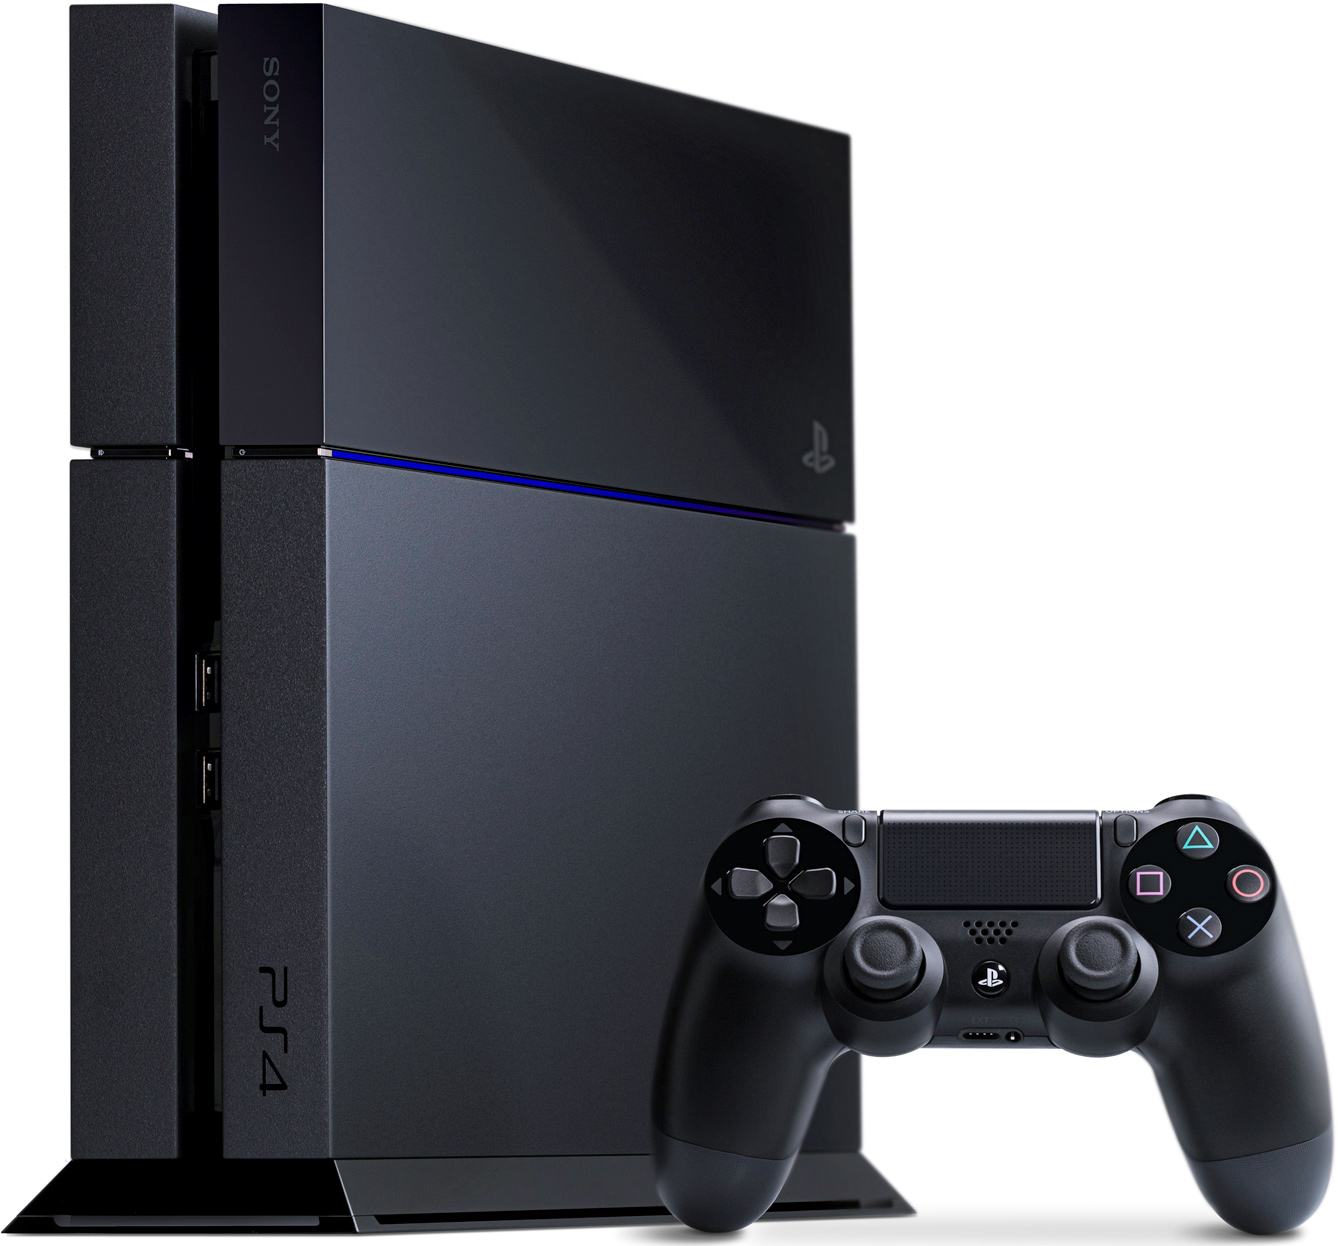 Sony PlayStation 4 to get Bluray 3D support 'soon' KitGuru